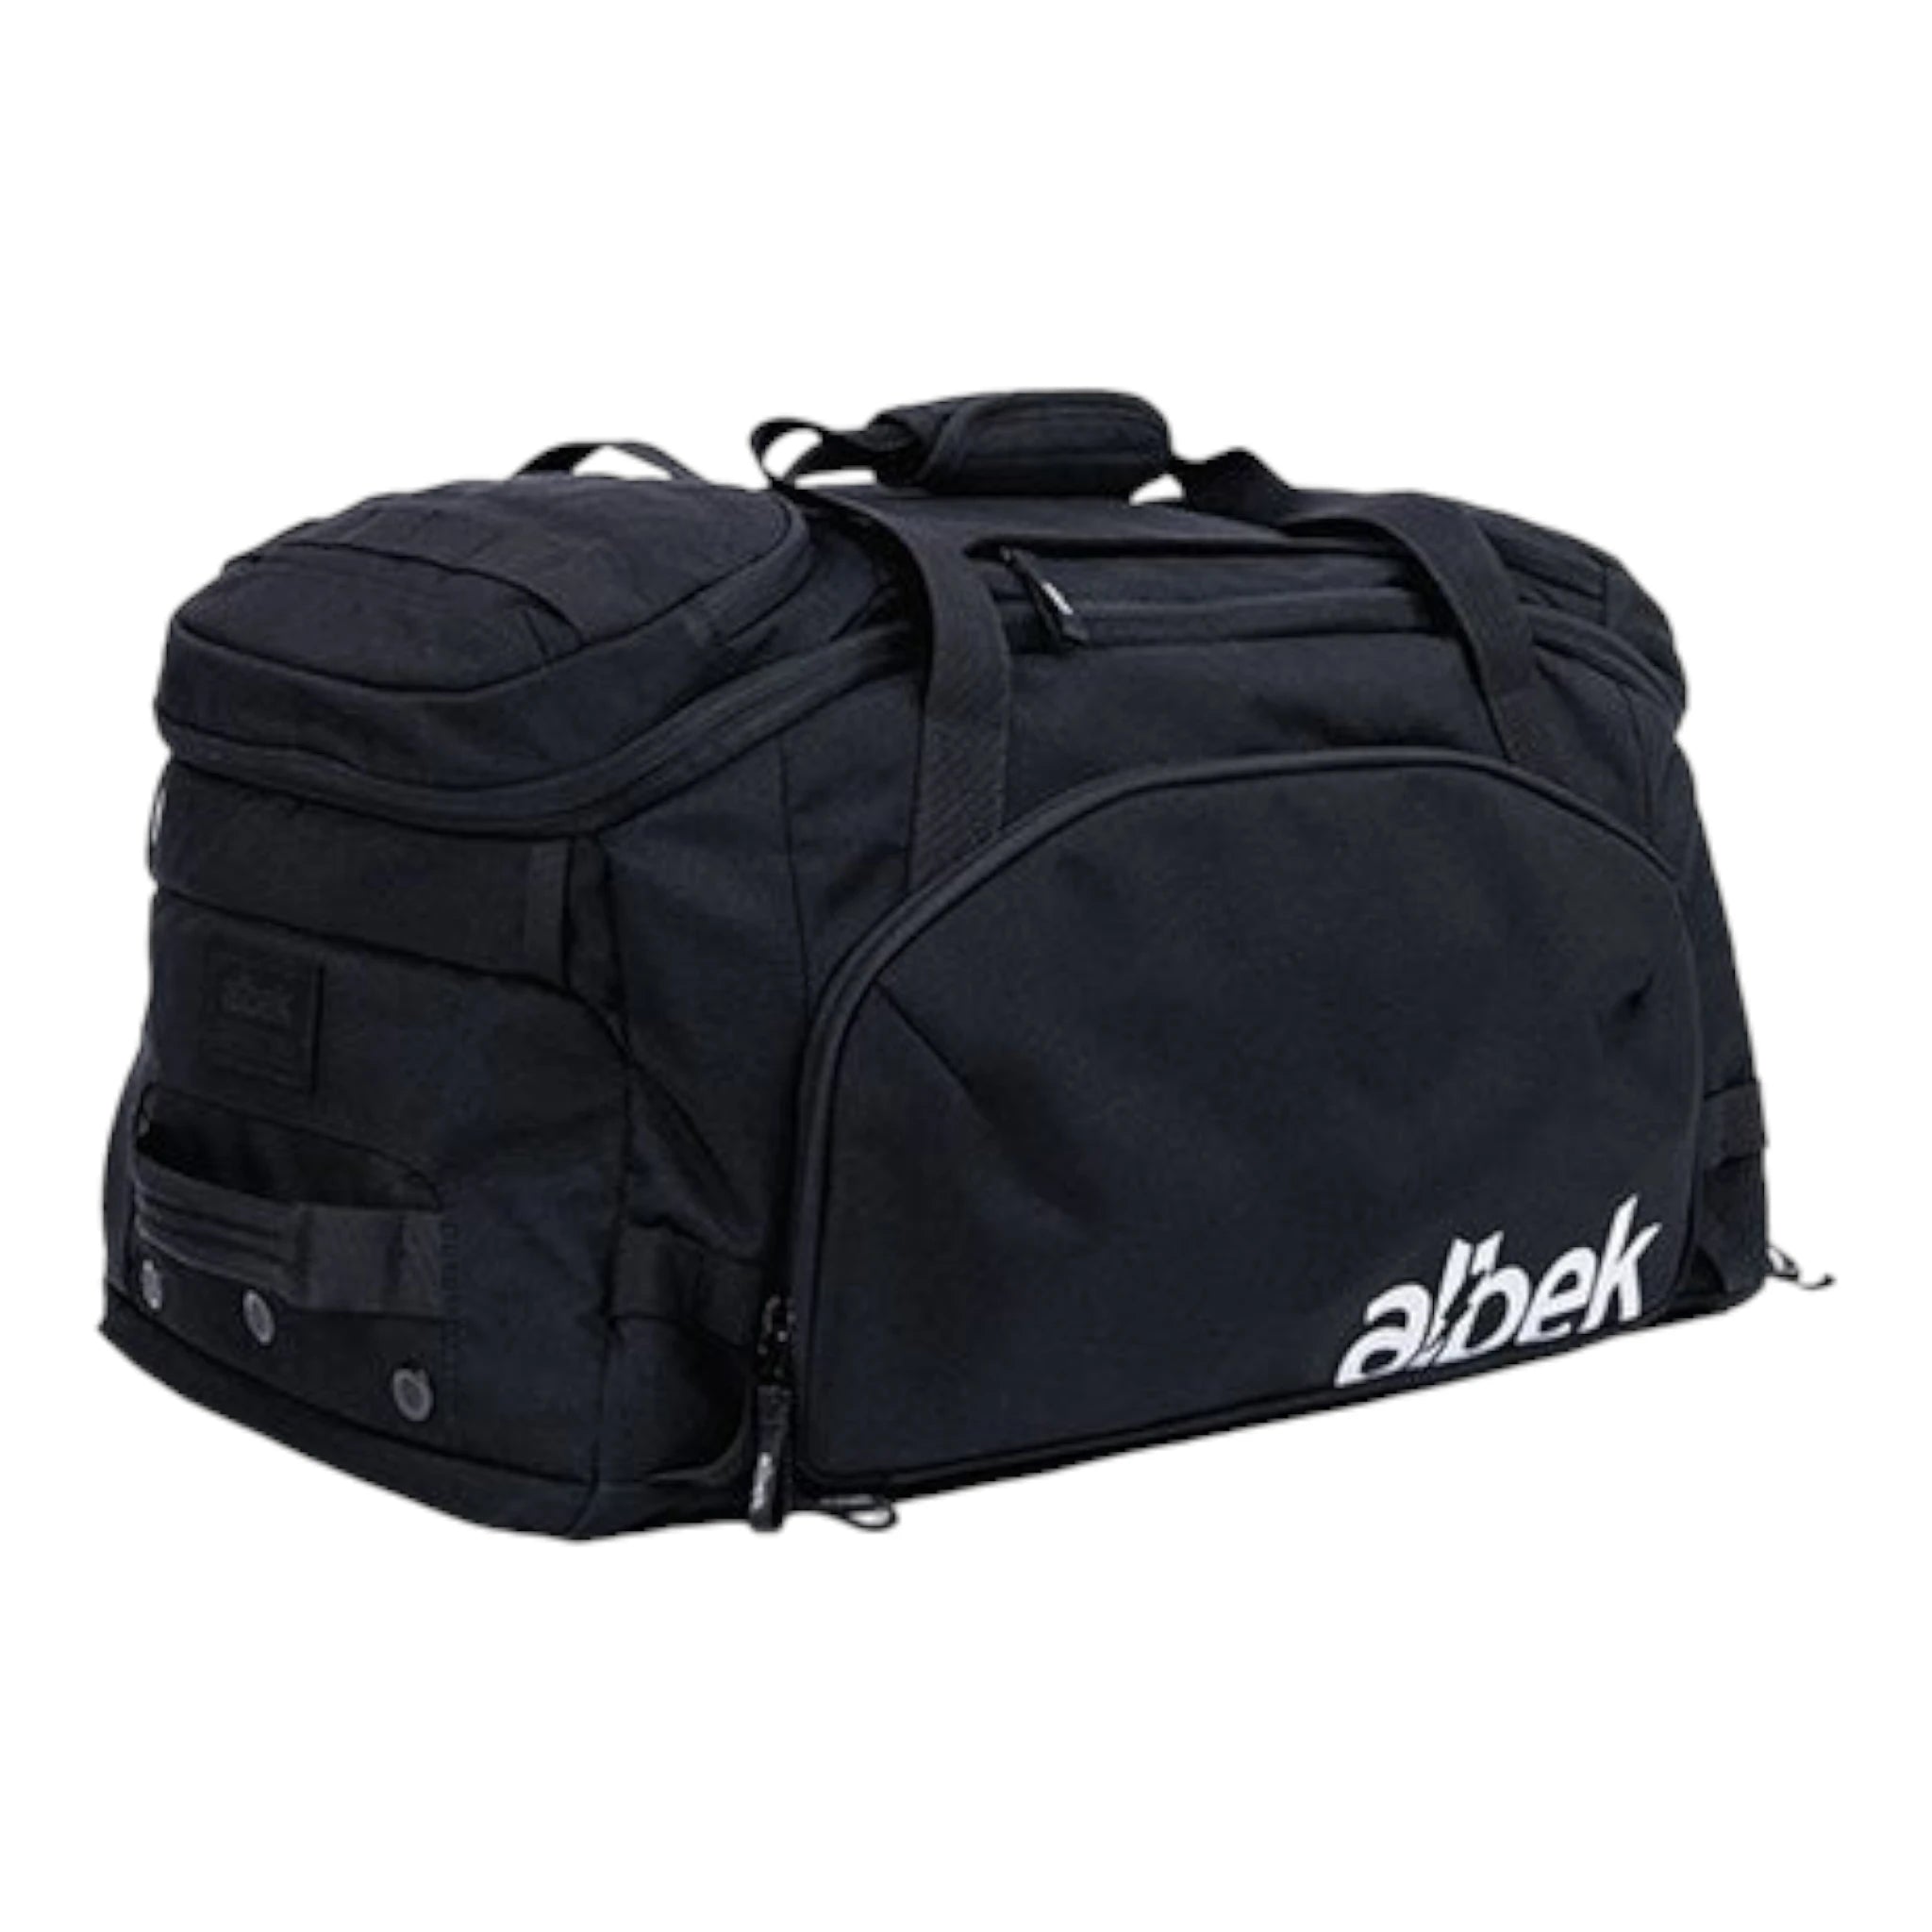 Albek Gear Bag Skytrail 51 Duffel Covert Black